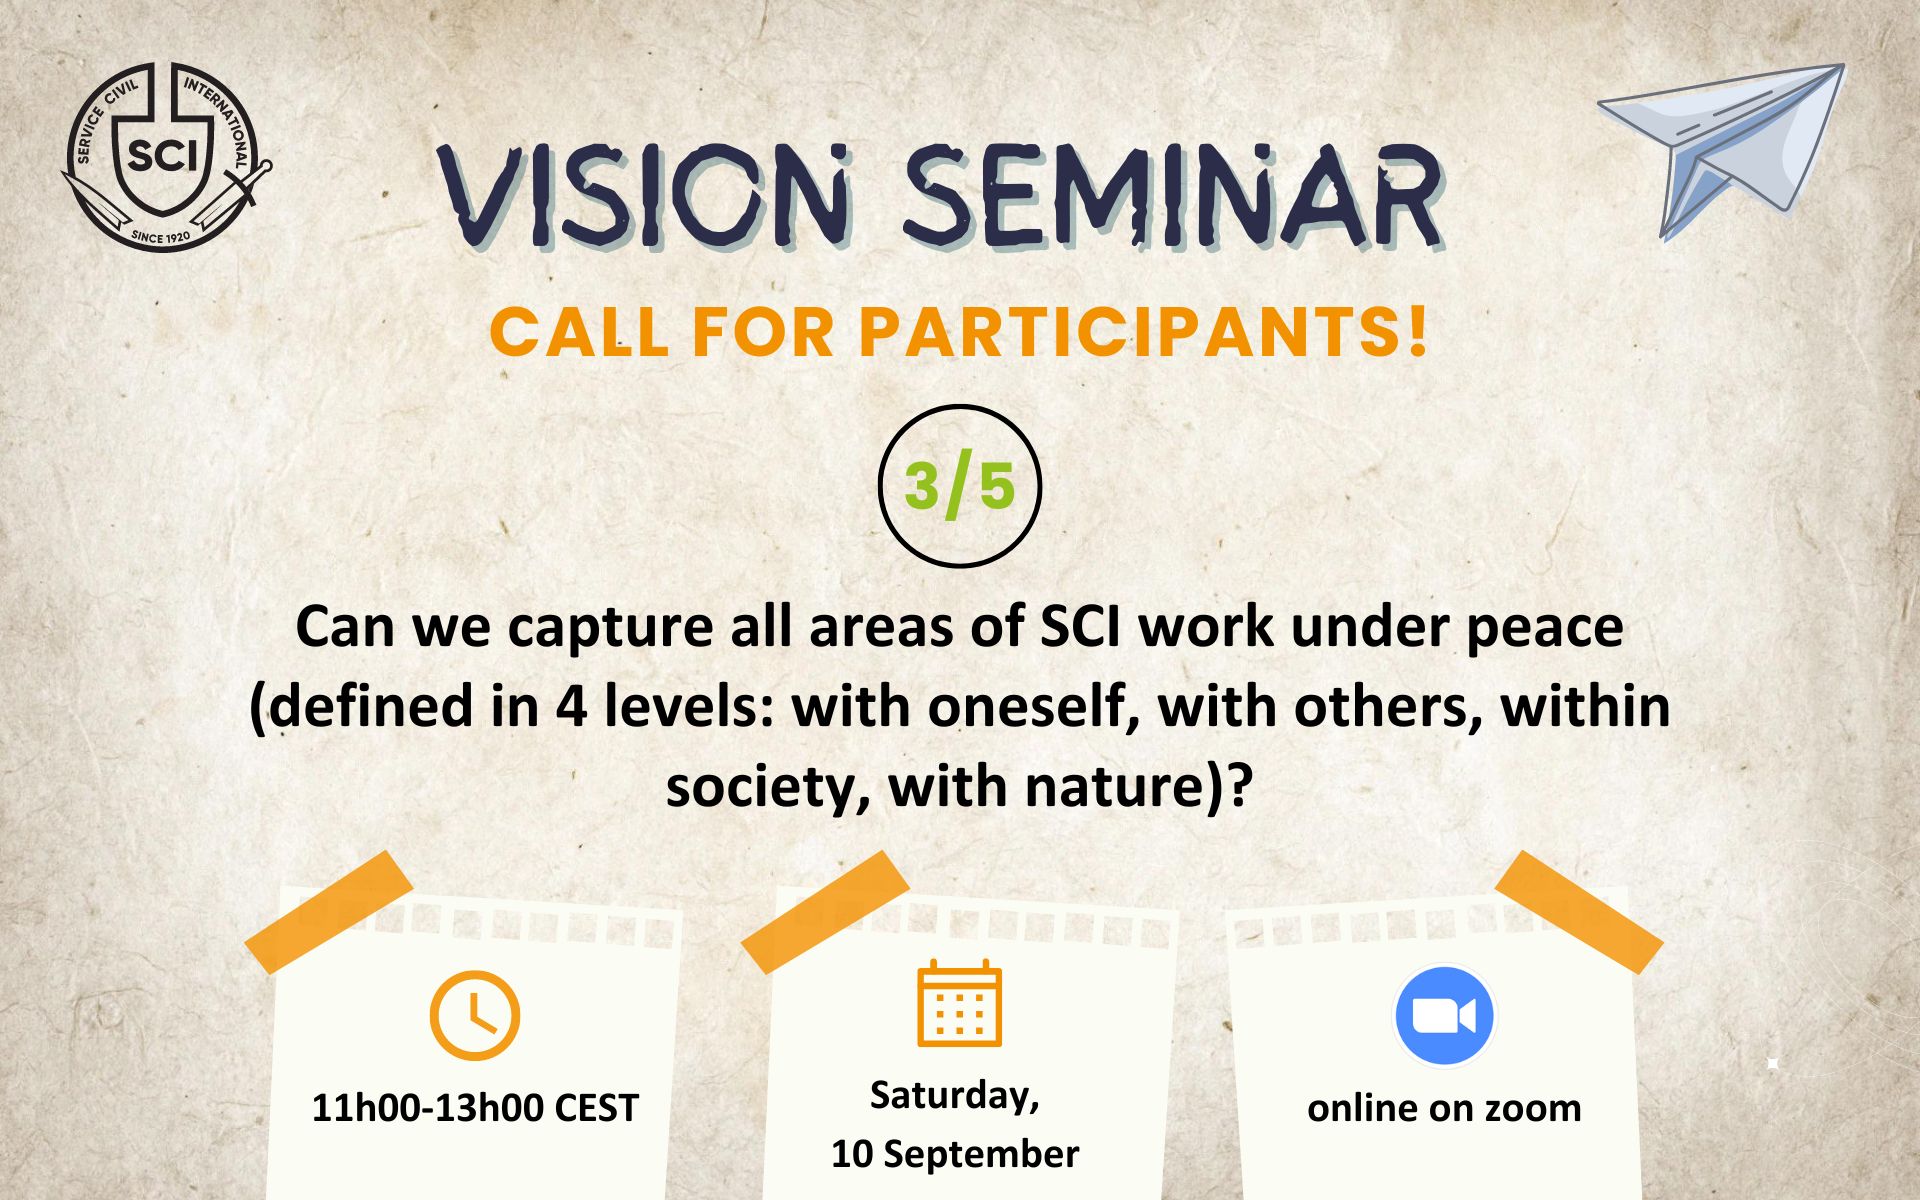 Vision seminar - call for participants 1 of 5